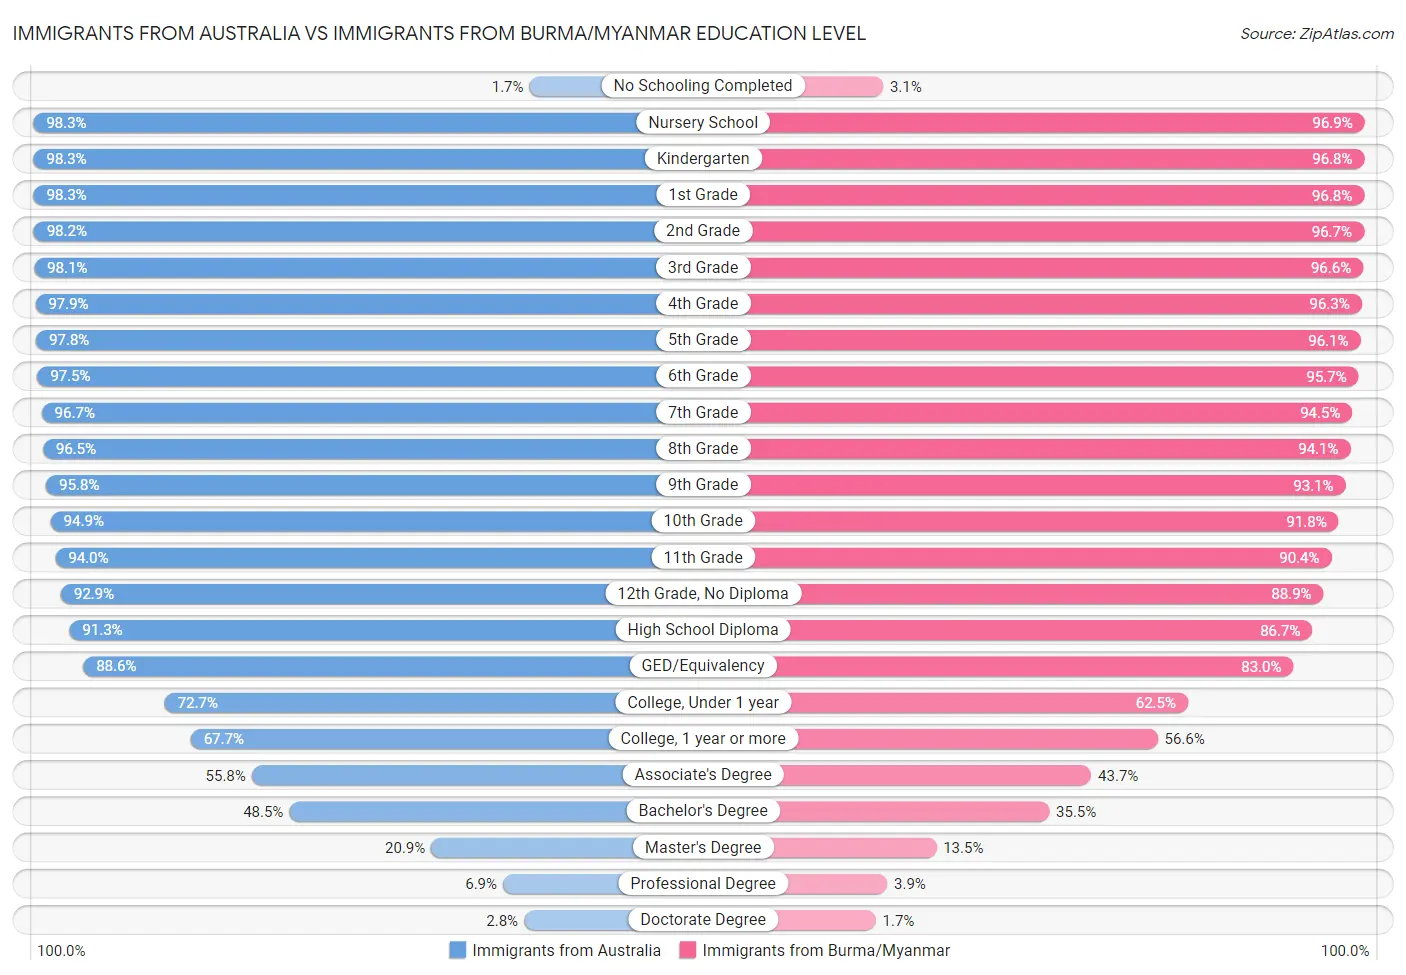 Immigrants from Australia vs Immigrants from Burma/Myanmar Education Level